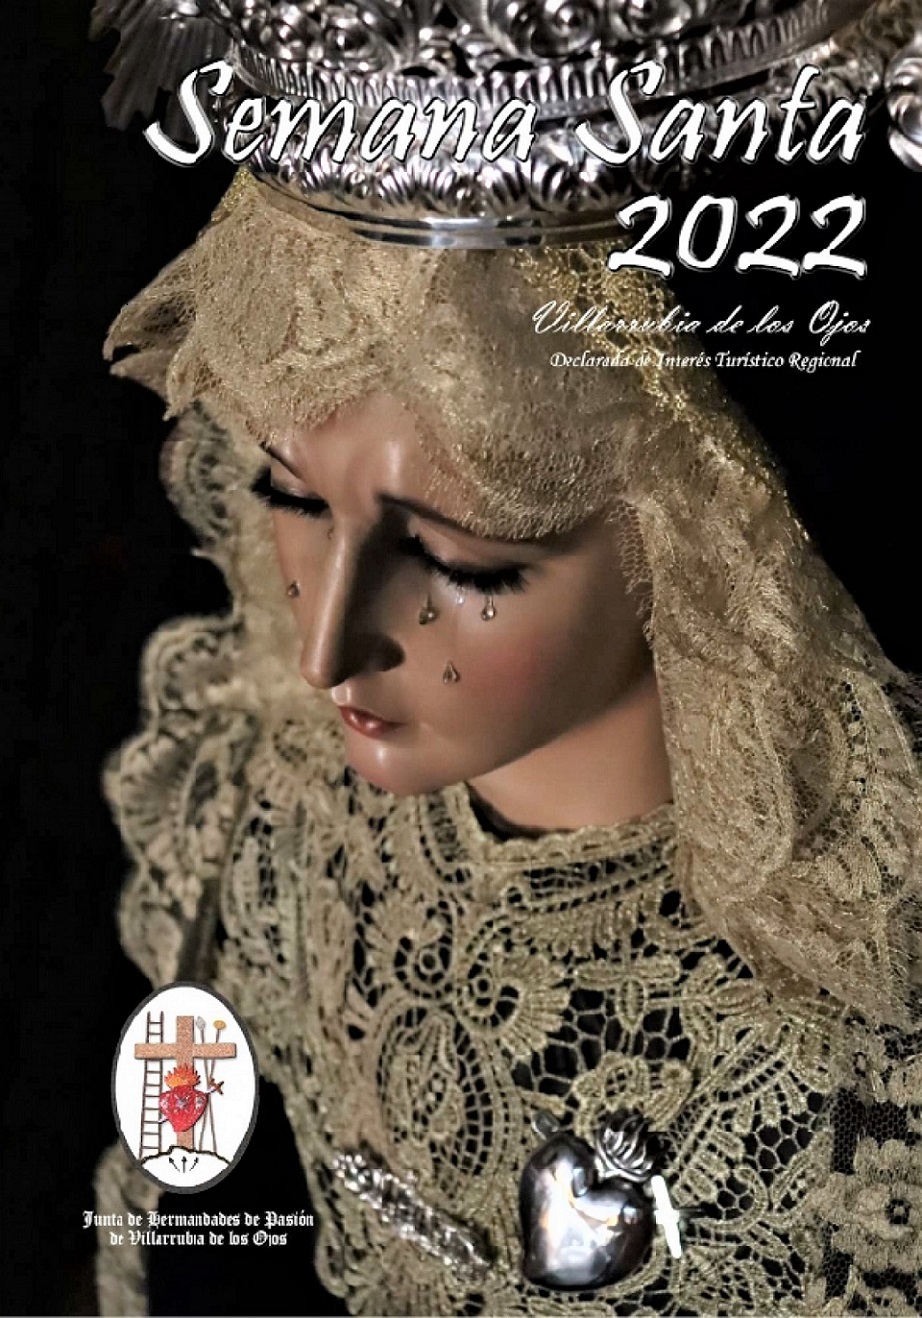  CARTELES  SEMANA  SANTA  2022  (II) - Página 10 Zzz_vi57